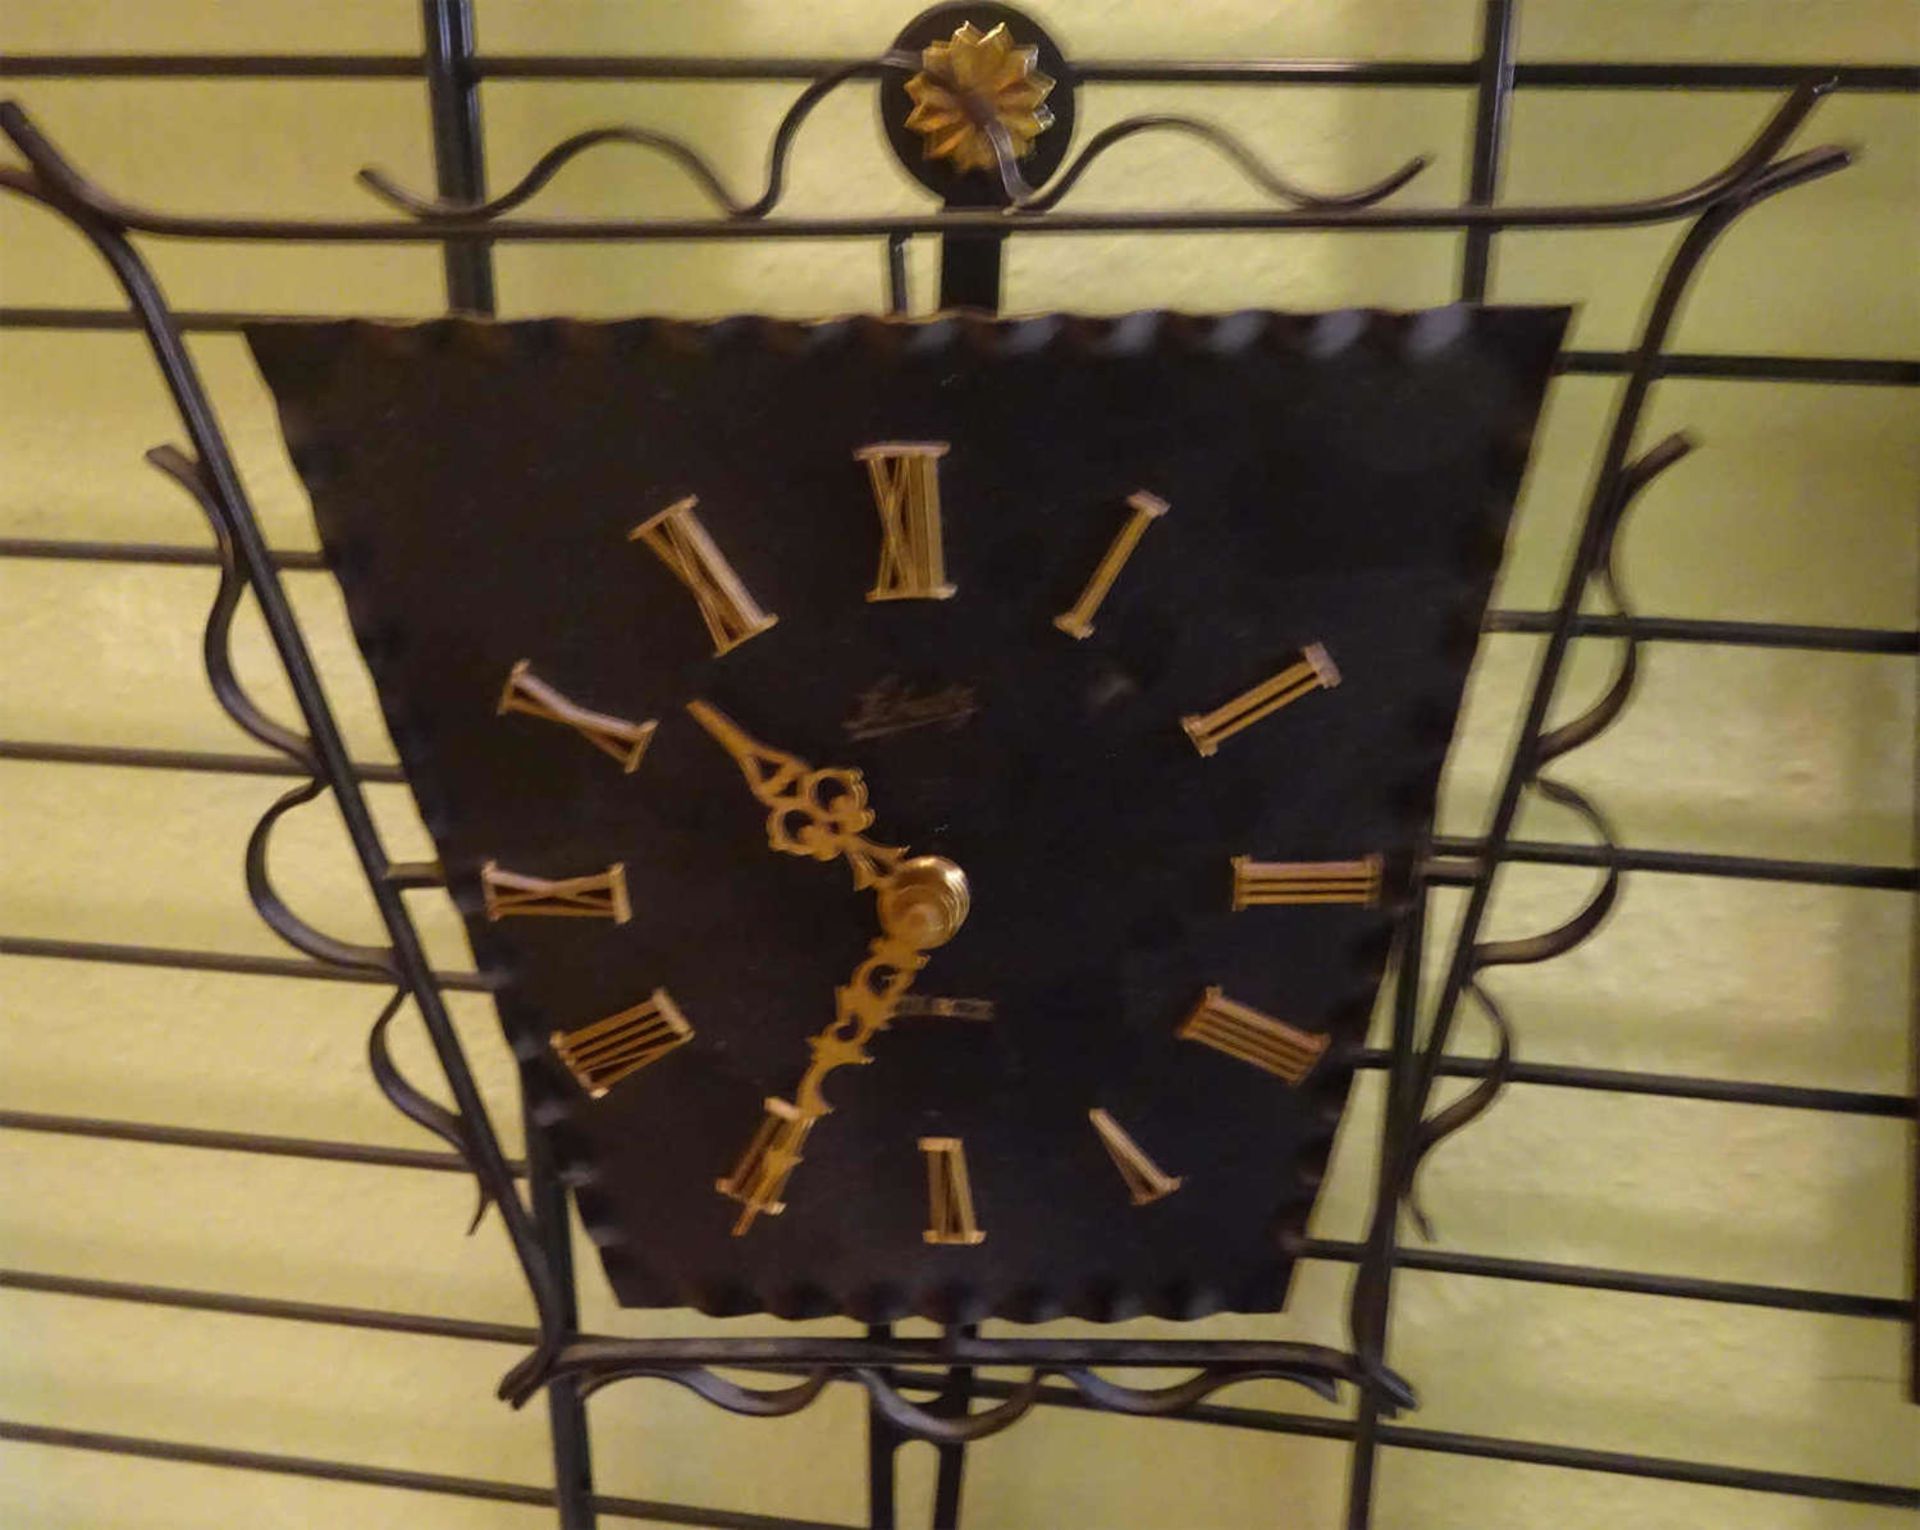 Wanduhr, Marke Schatz, elektrisch. 45 cmWall clock, brand treasure, electric. 45 cm - Image 2 of 2